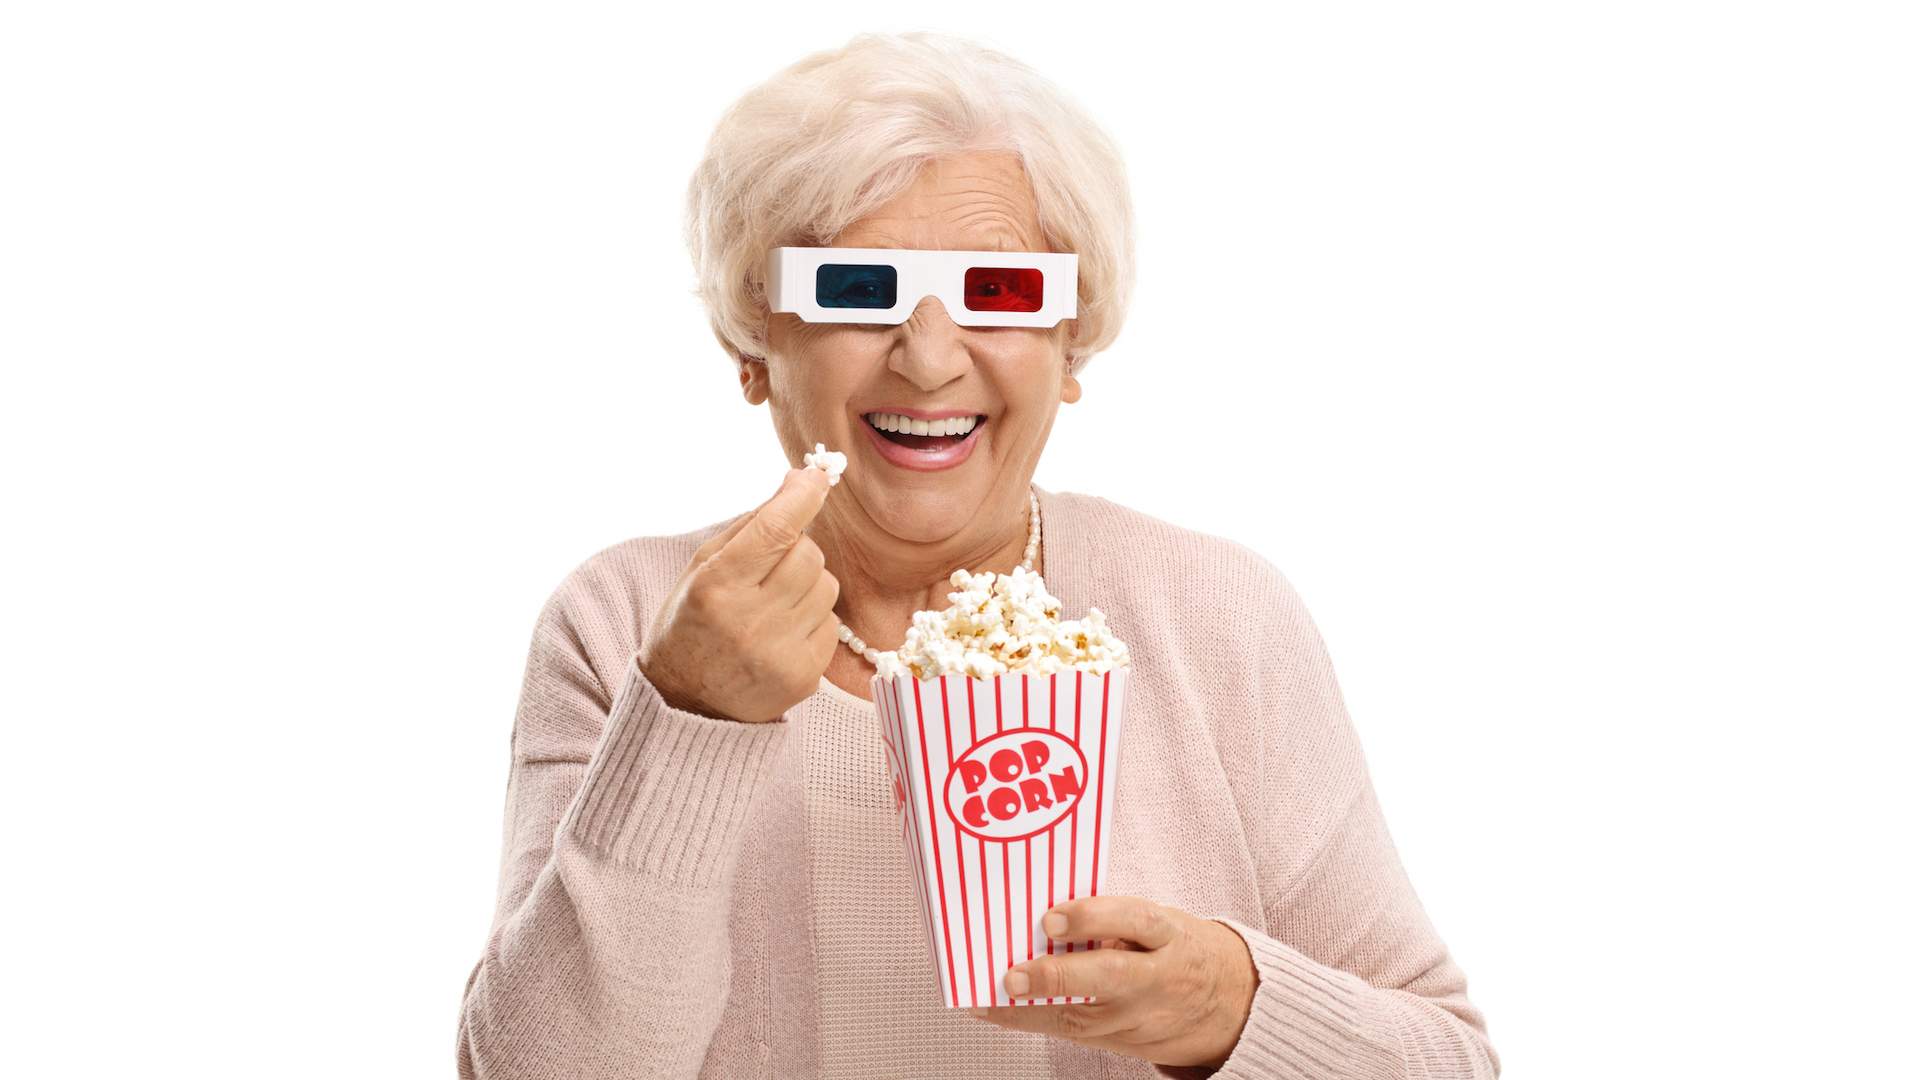 A grandma eating popcorn in 3D glasses